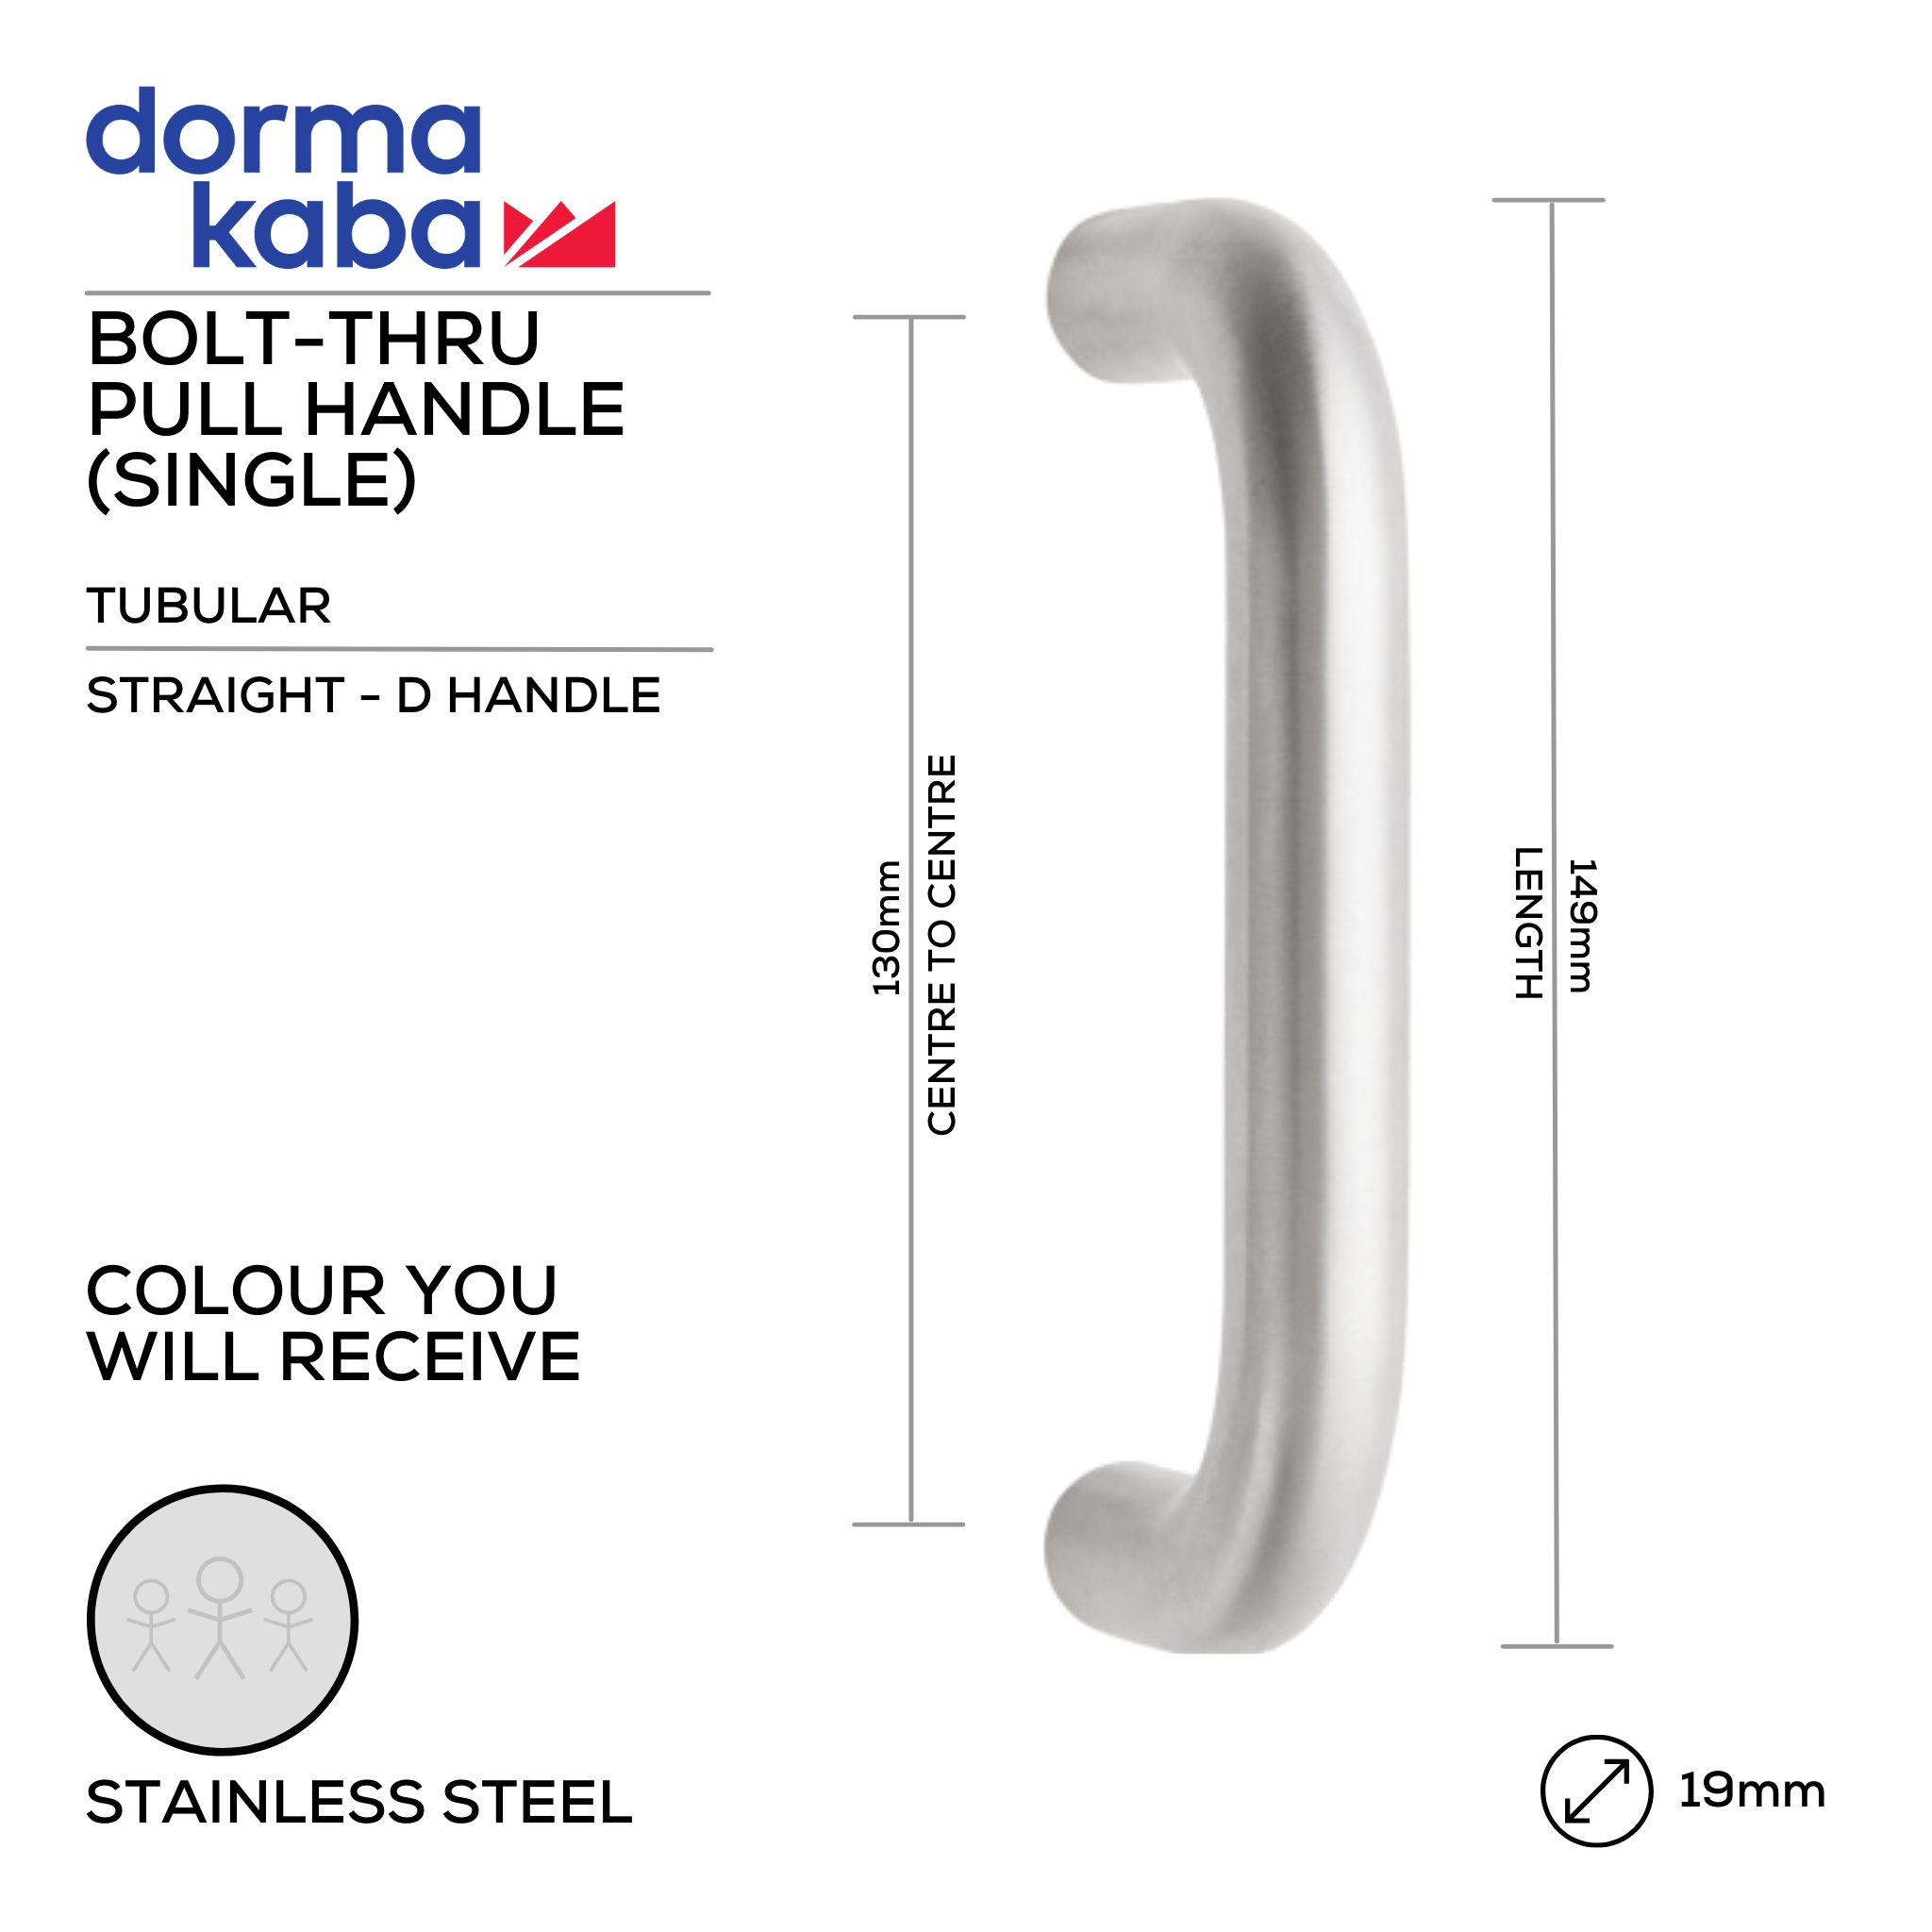 DPH 301C BT, Pull Handle, Tubular, Straight, D Handle, BoltThru, 19mm (Ø) x 149mm (l) x 130mm (ctc), Stainless Steel, DORMAKABA